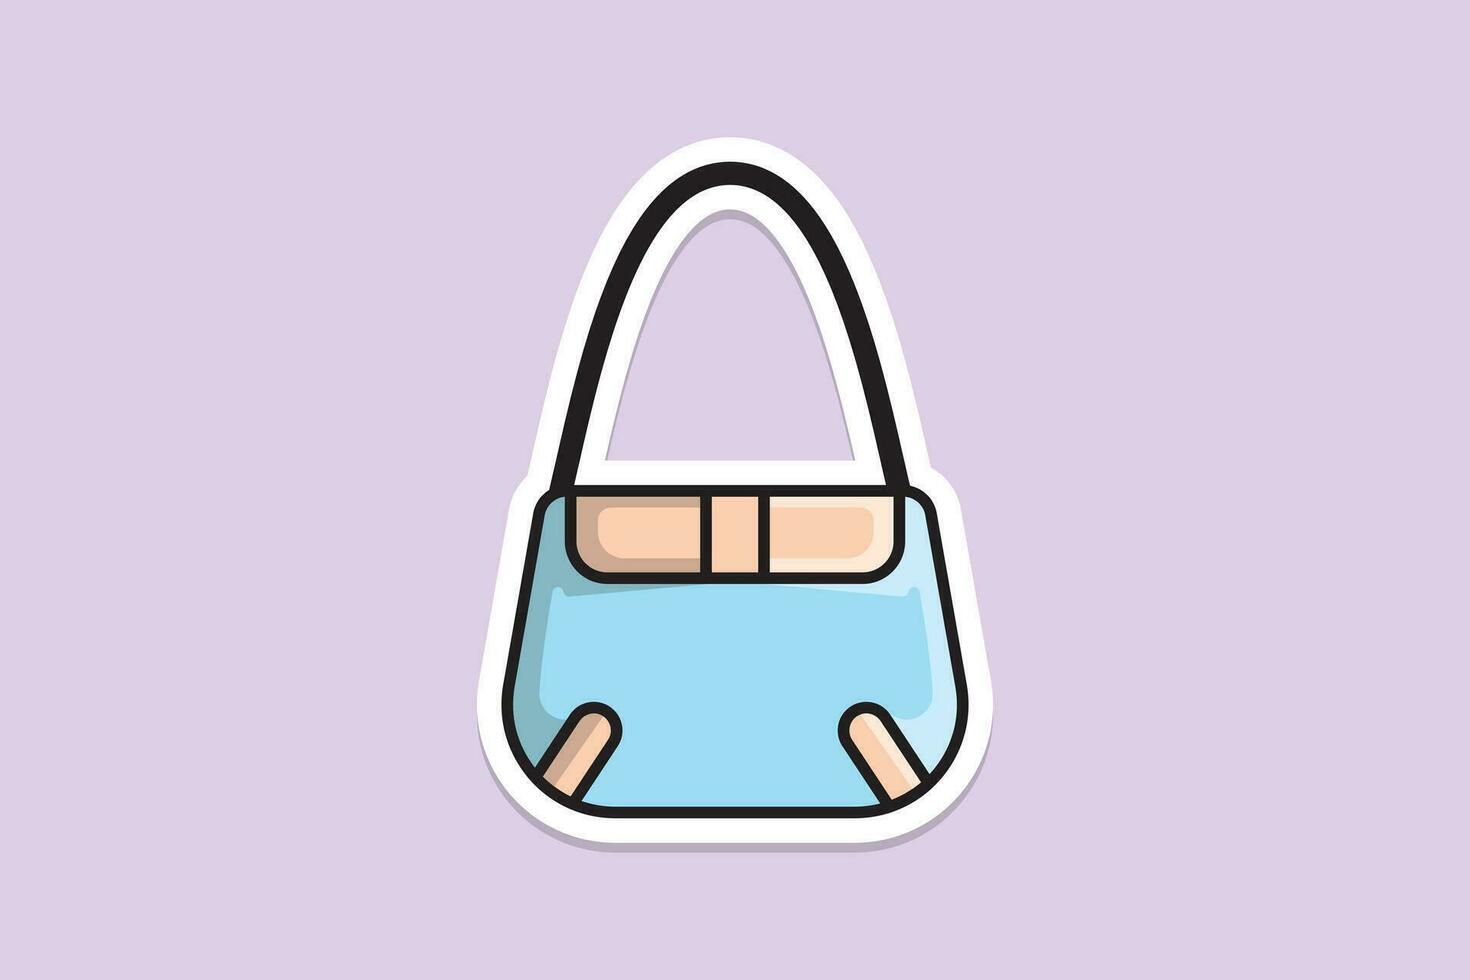 Women Fashion Clutch Leather Purse or Bag sticker design vector illustration. Beauty fashion objects icon concept. Modern style evening handbag sticker design logo icon.